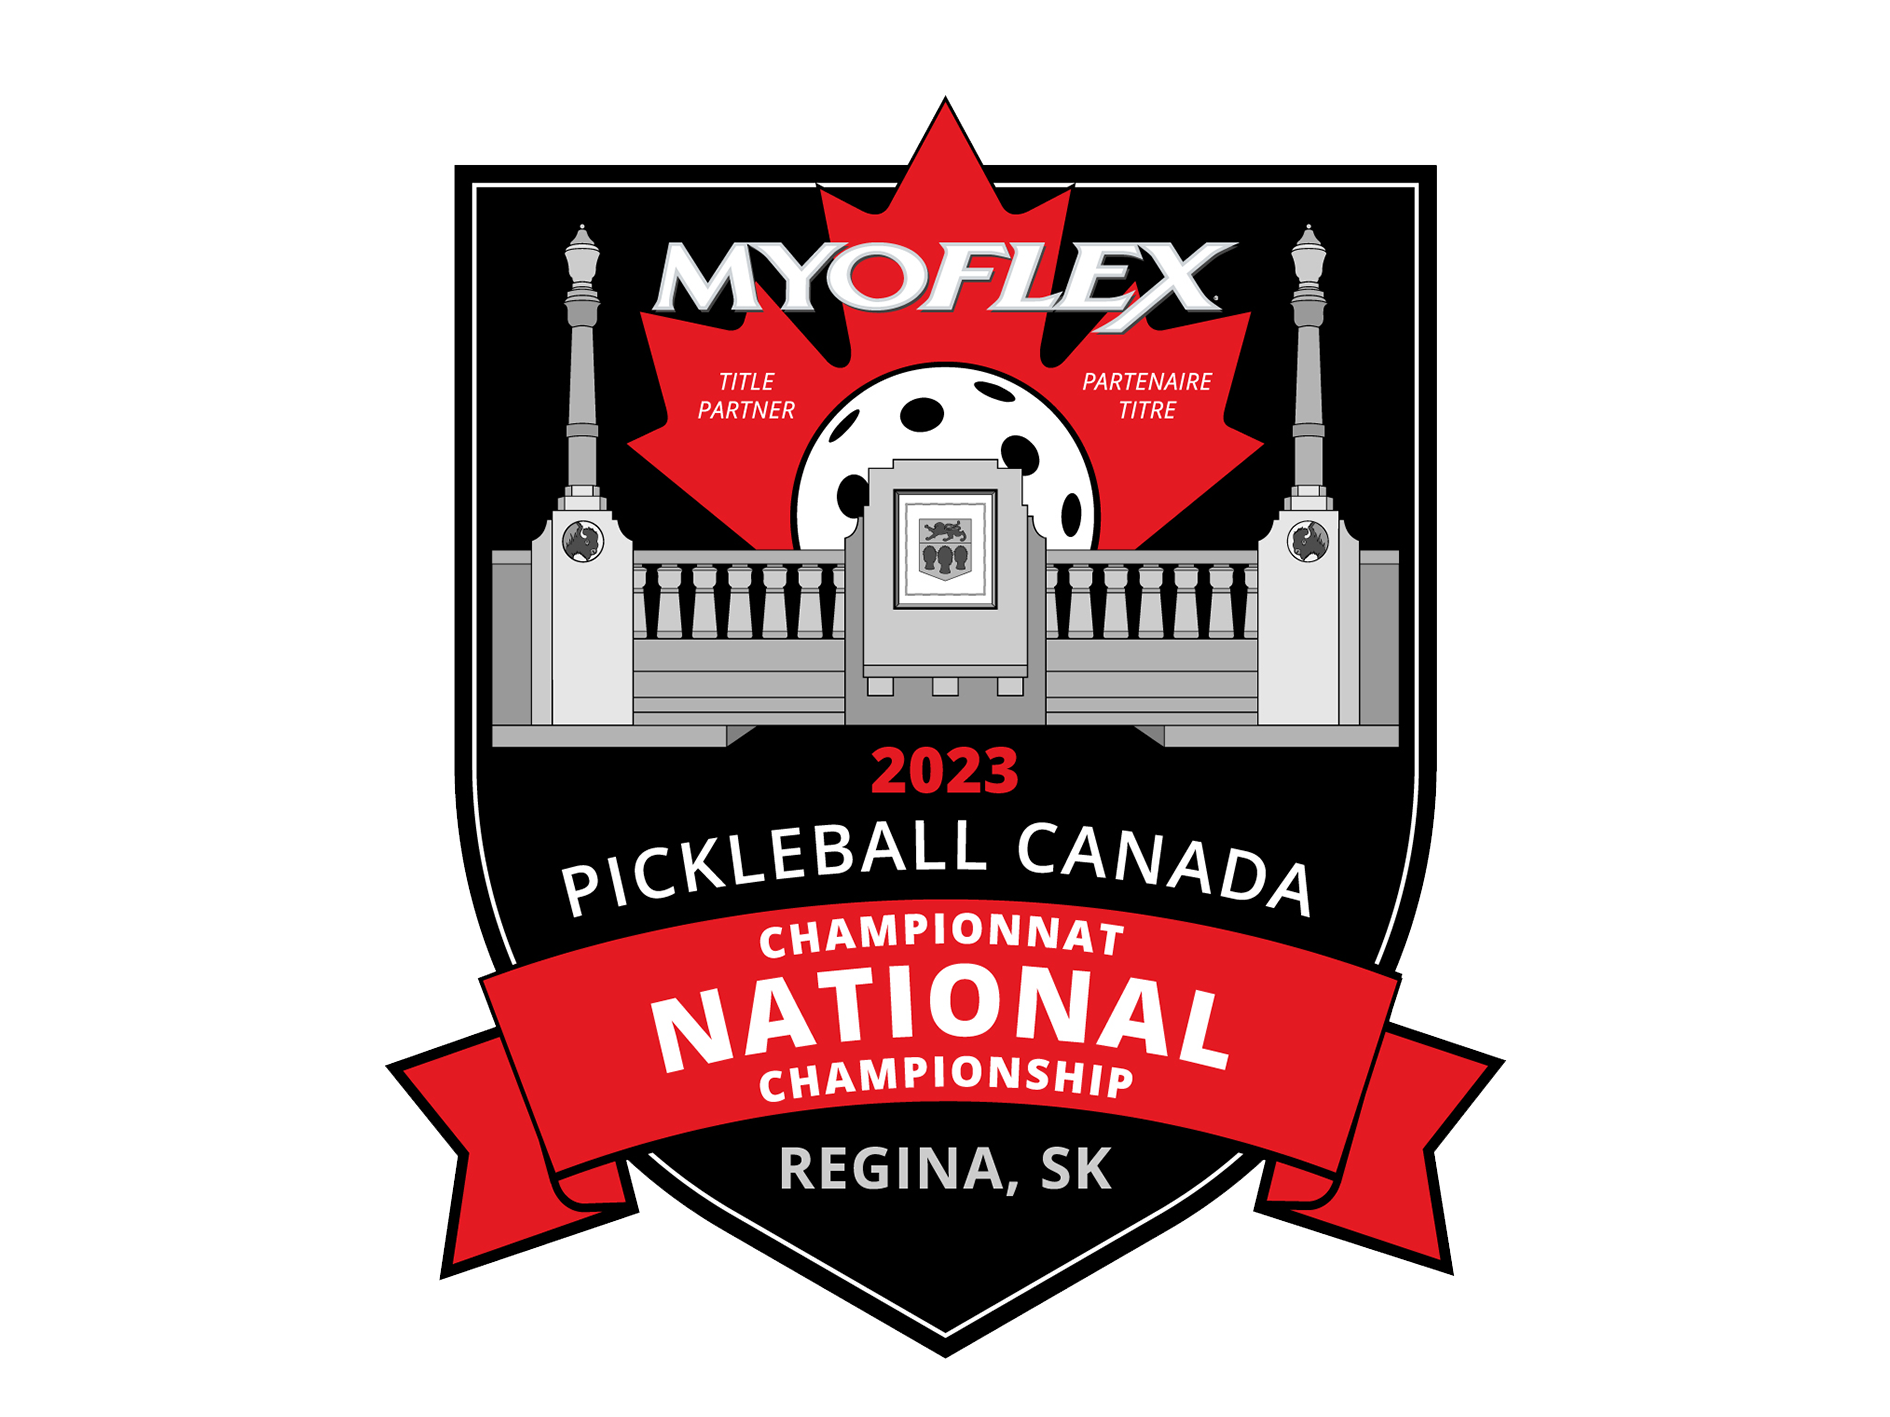 Championnat national de pickleball Myoflex® 2023